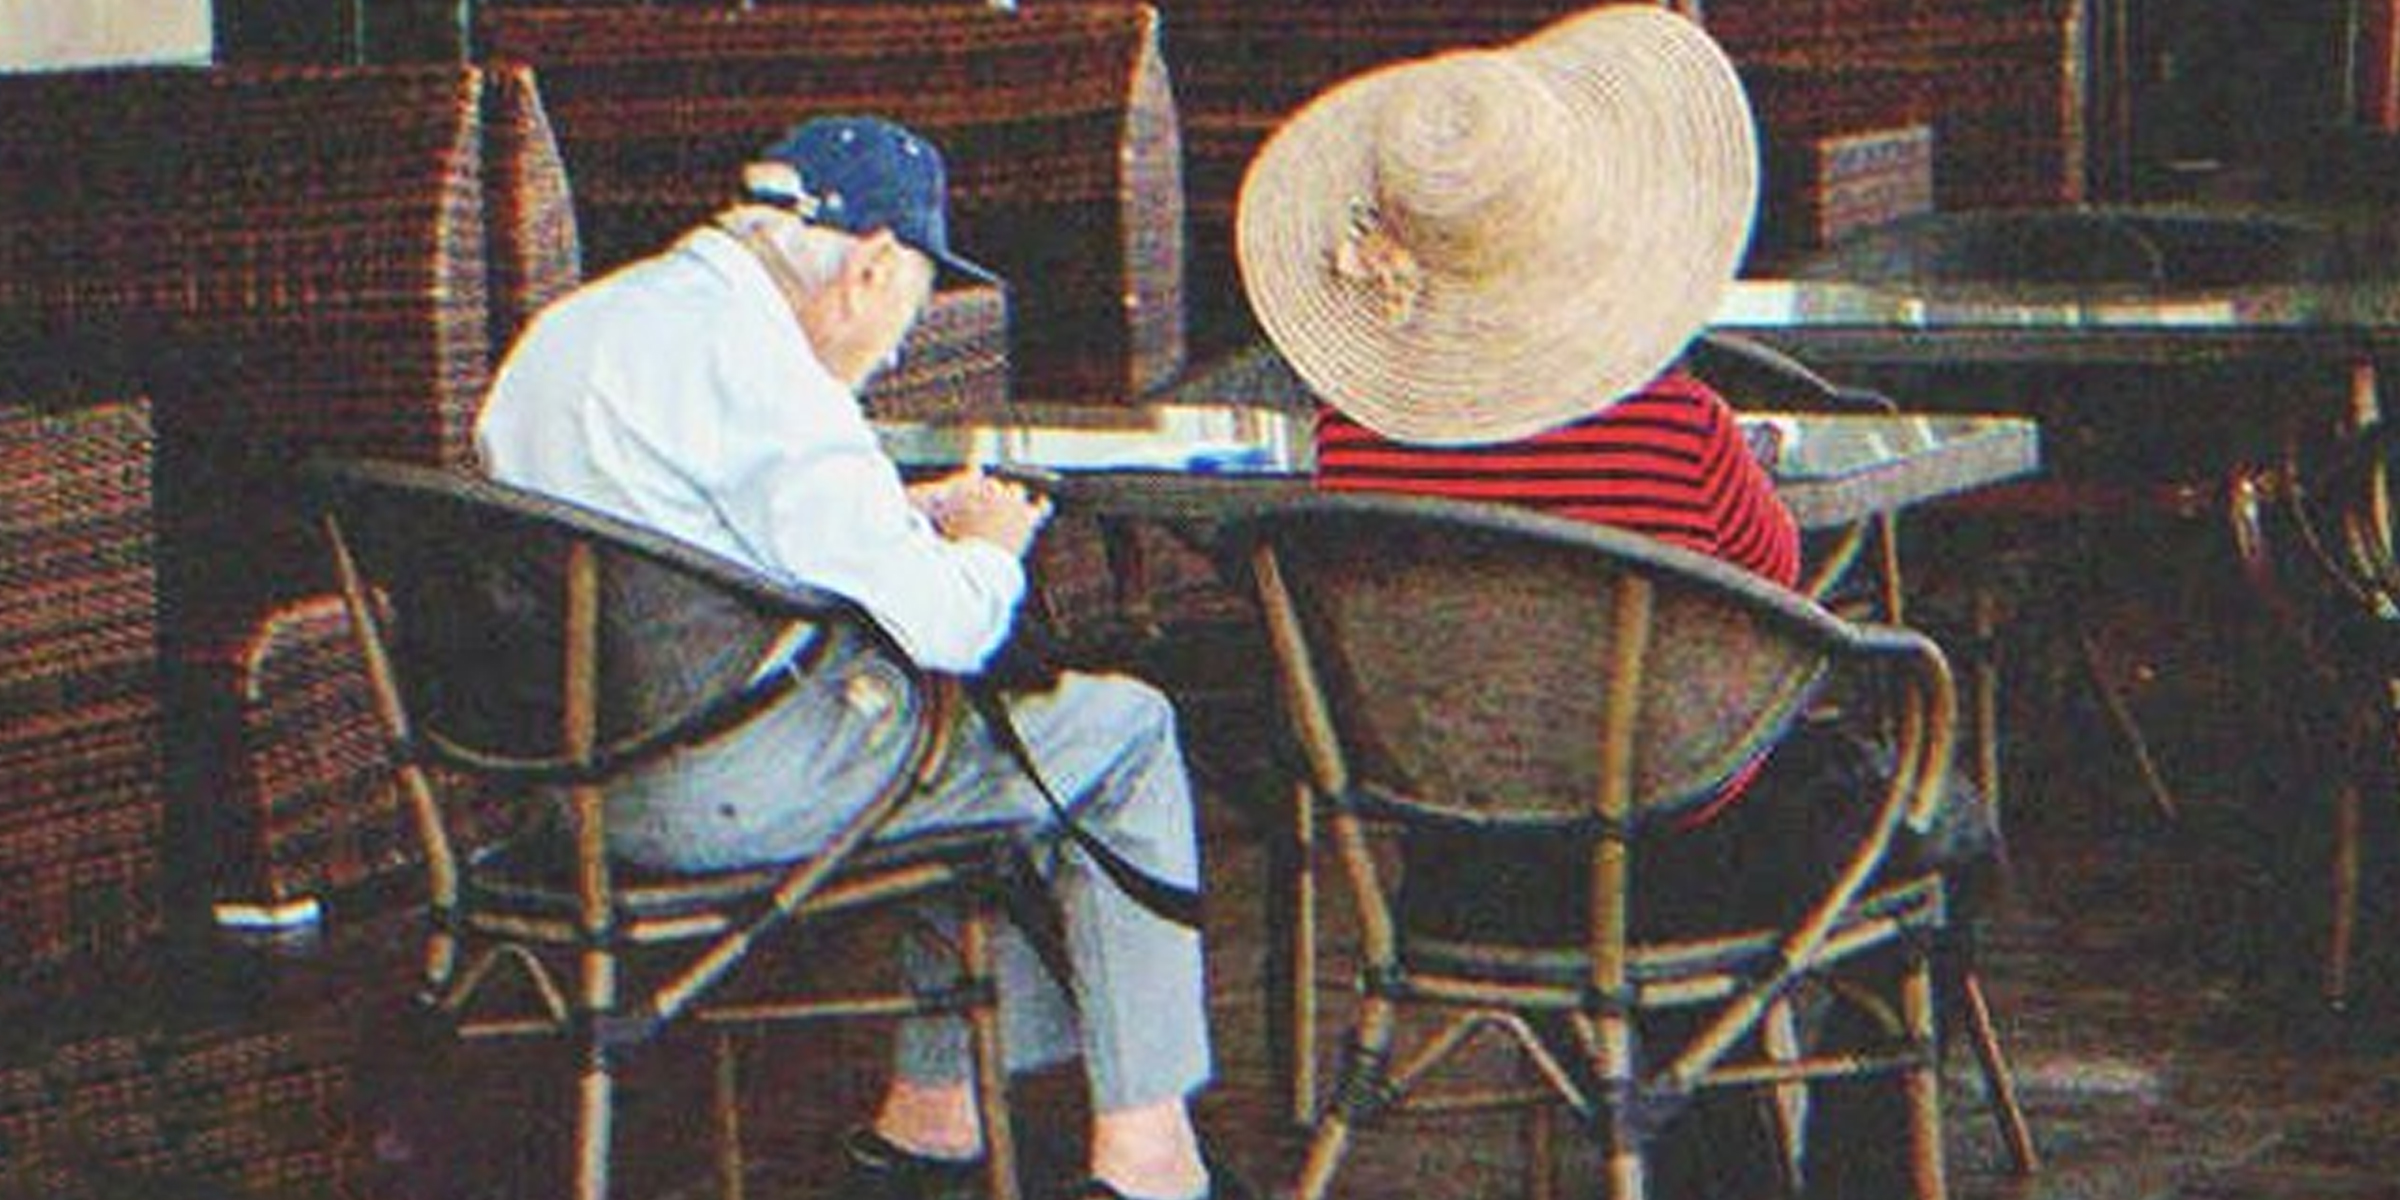 A couple of elders sitting in a restaurant | Source: Shutterstock